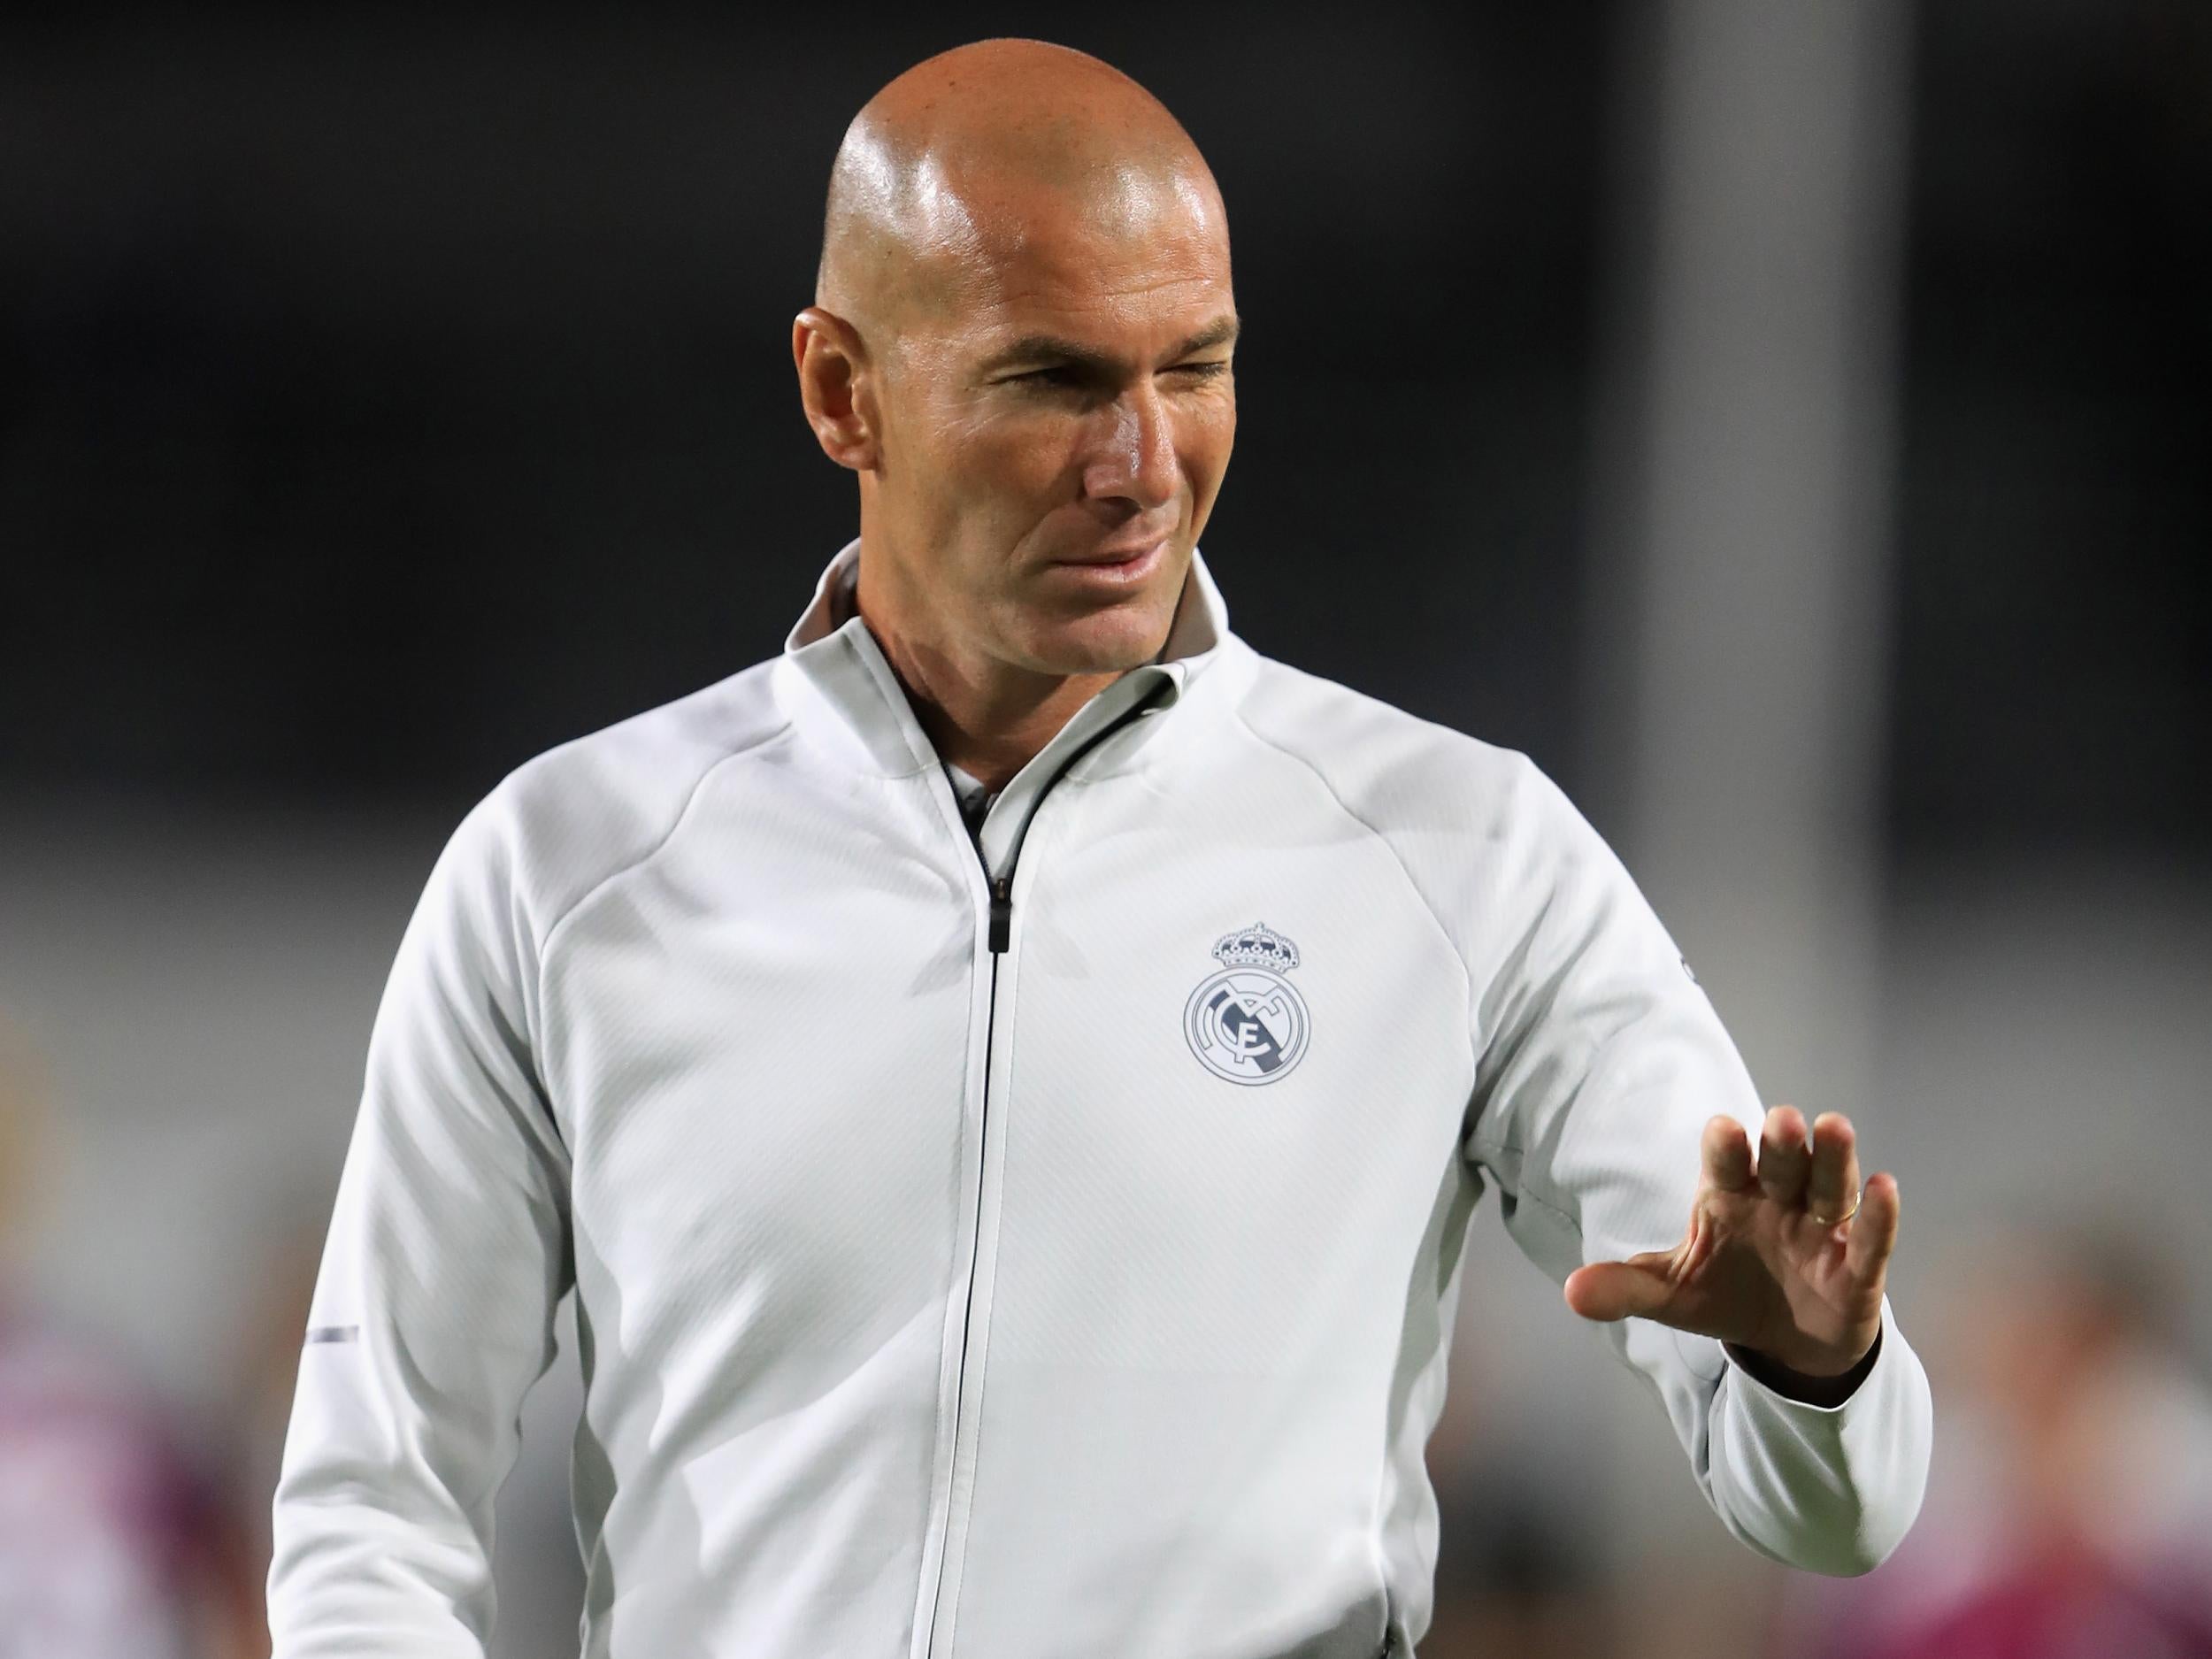 Zidane will lead Real against Barca three times before the La Liga season starts